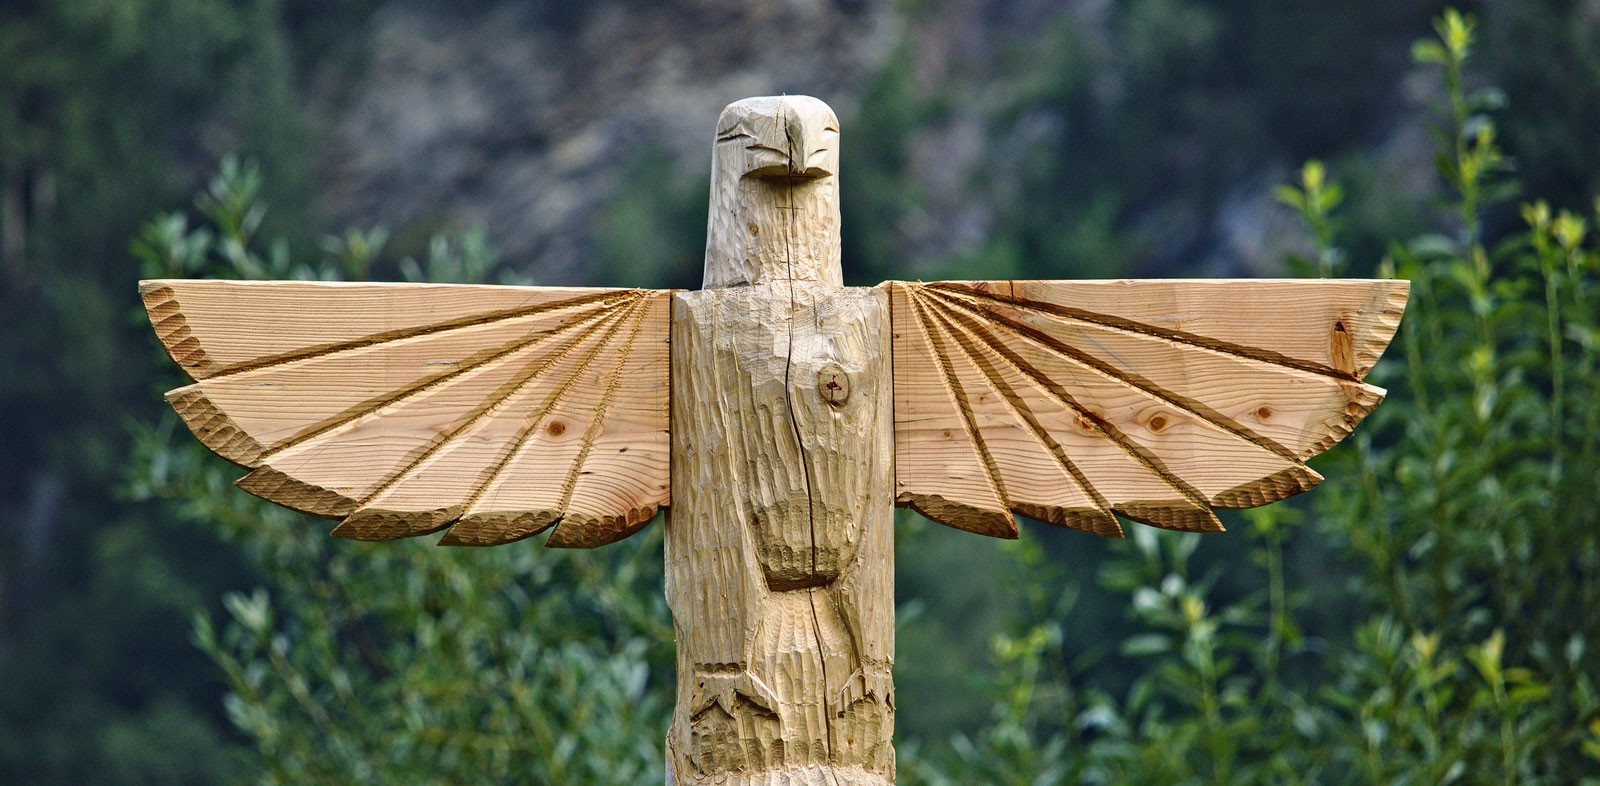 cherokee thunderbird symbol